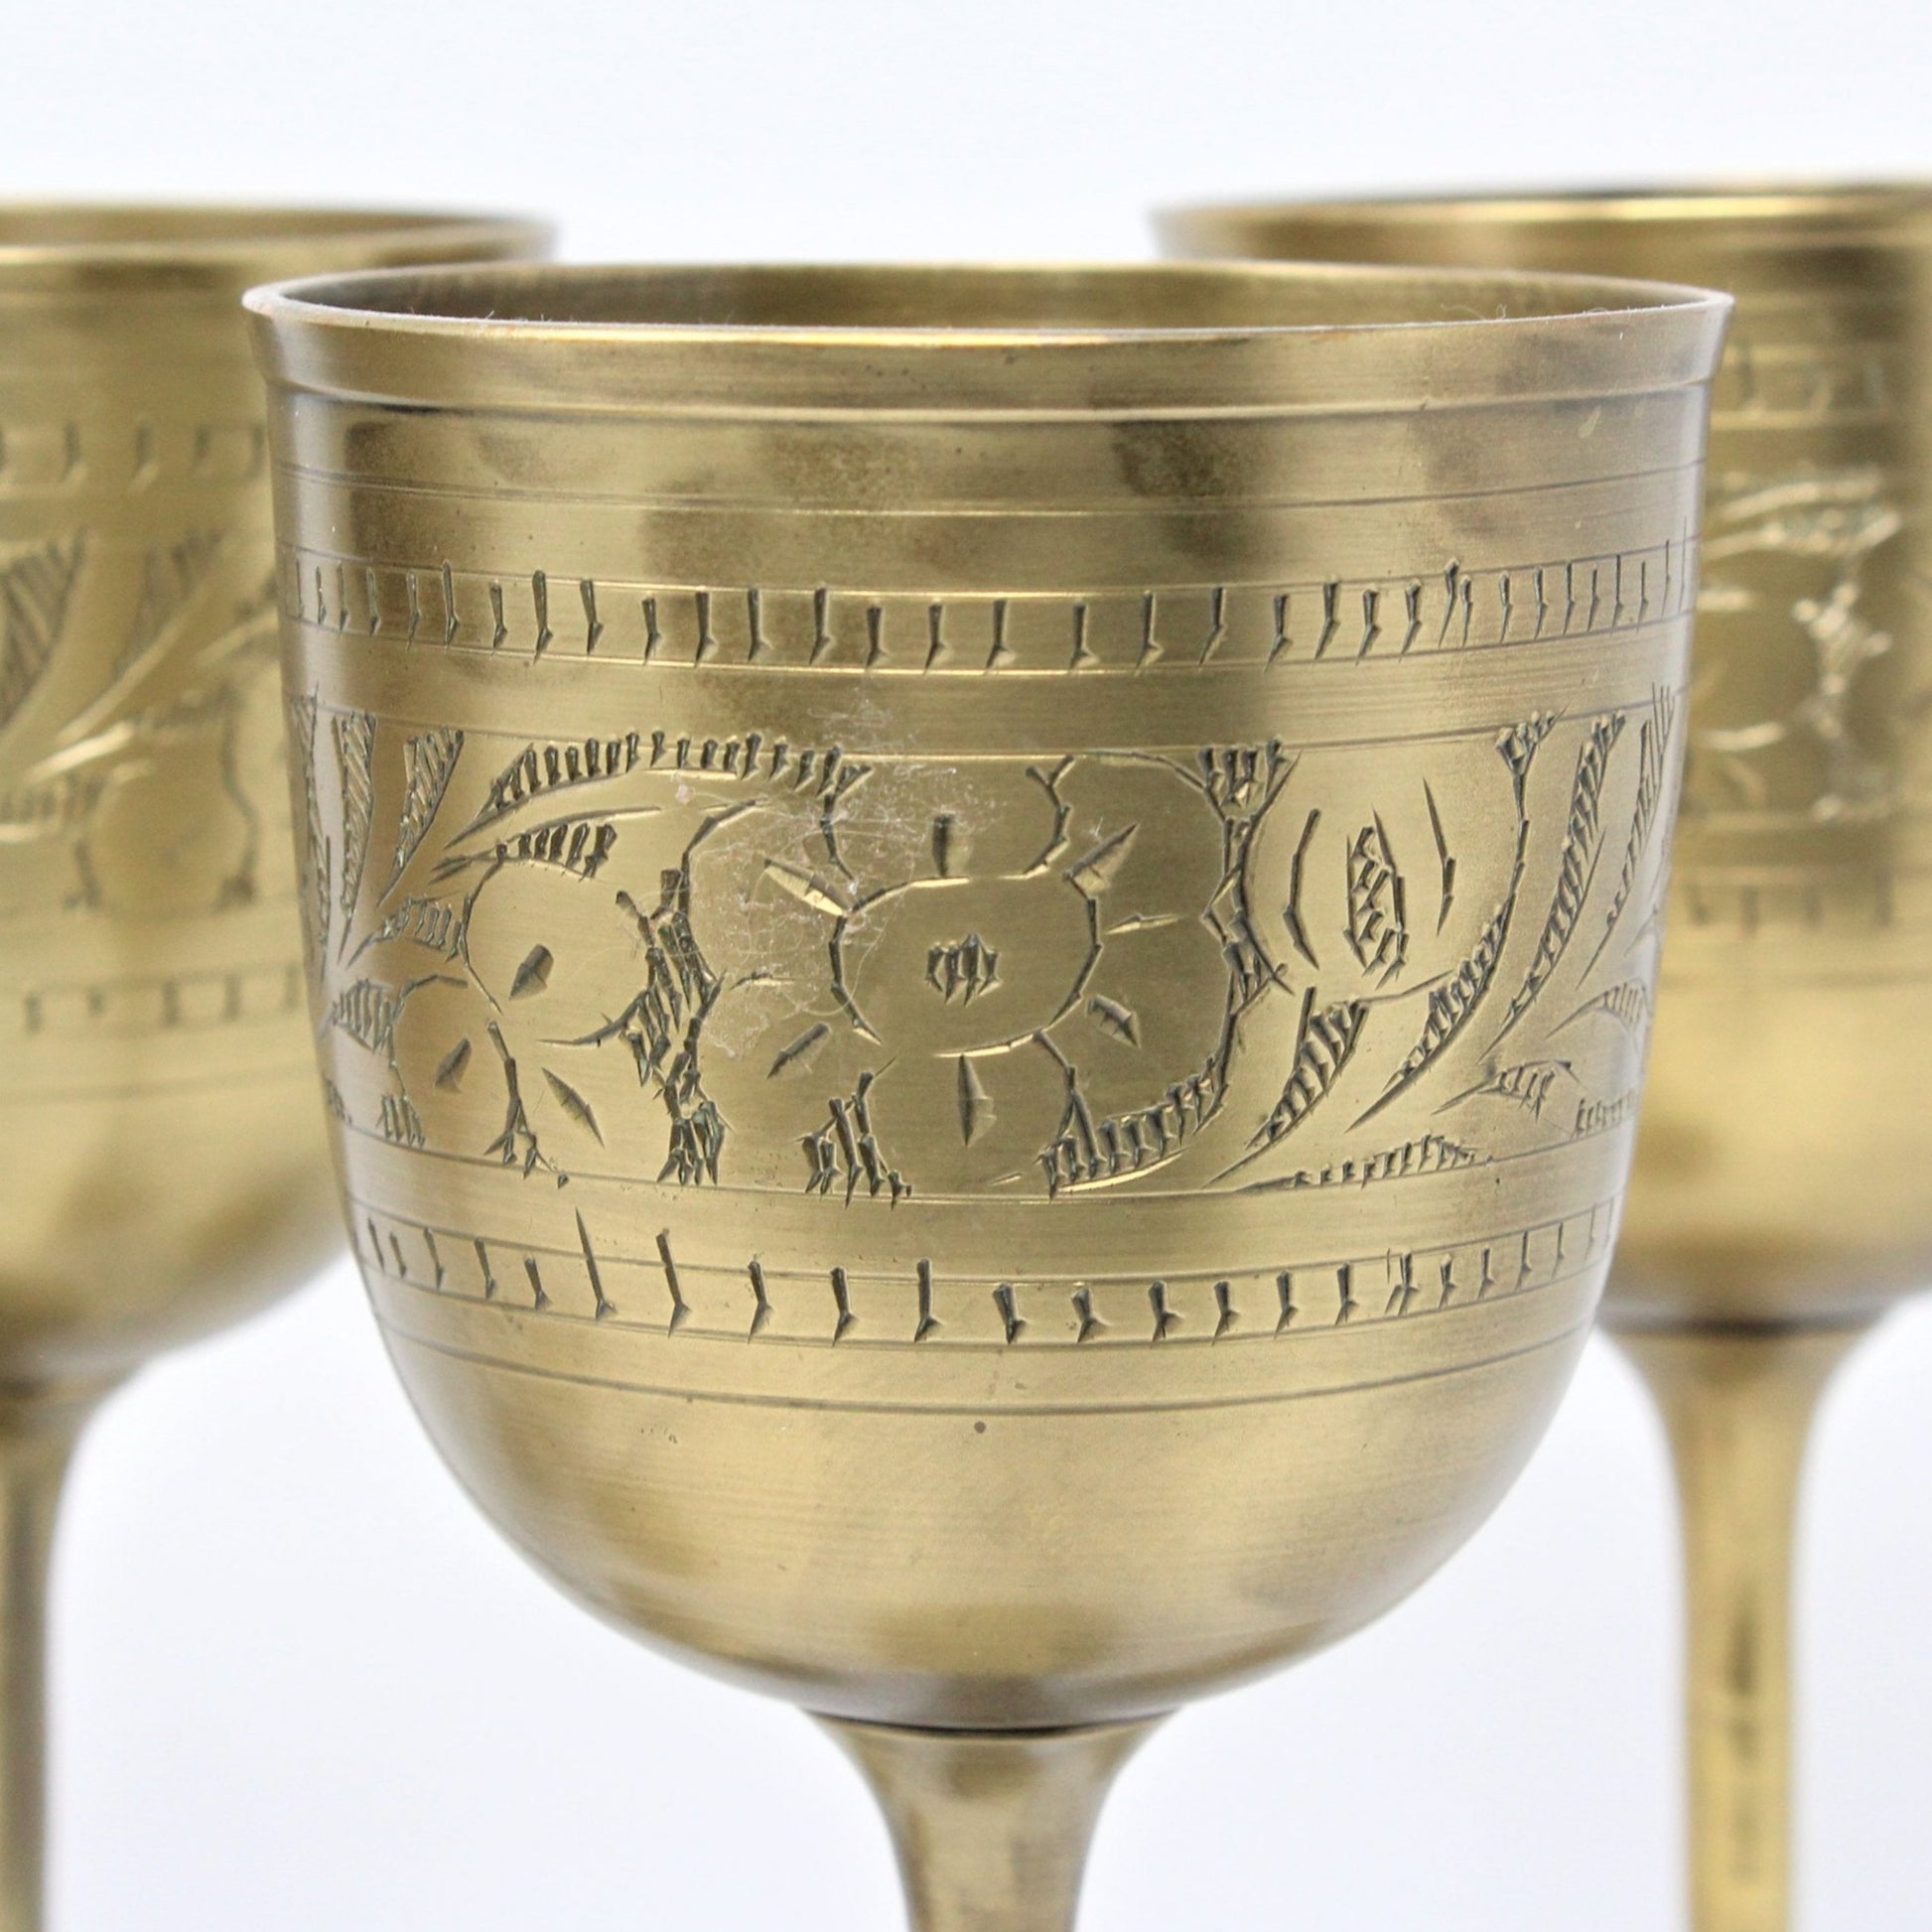 Set of Six Vintage Saudi Arabian Etched Brass Wine Glasses